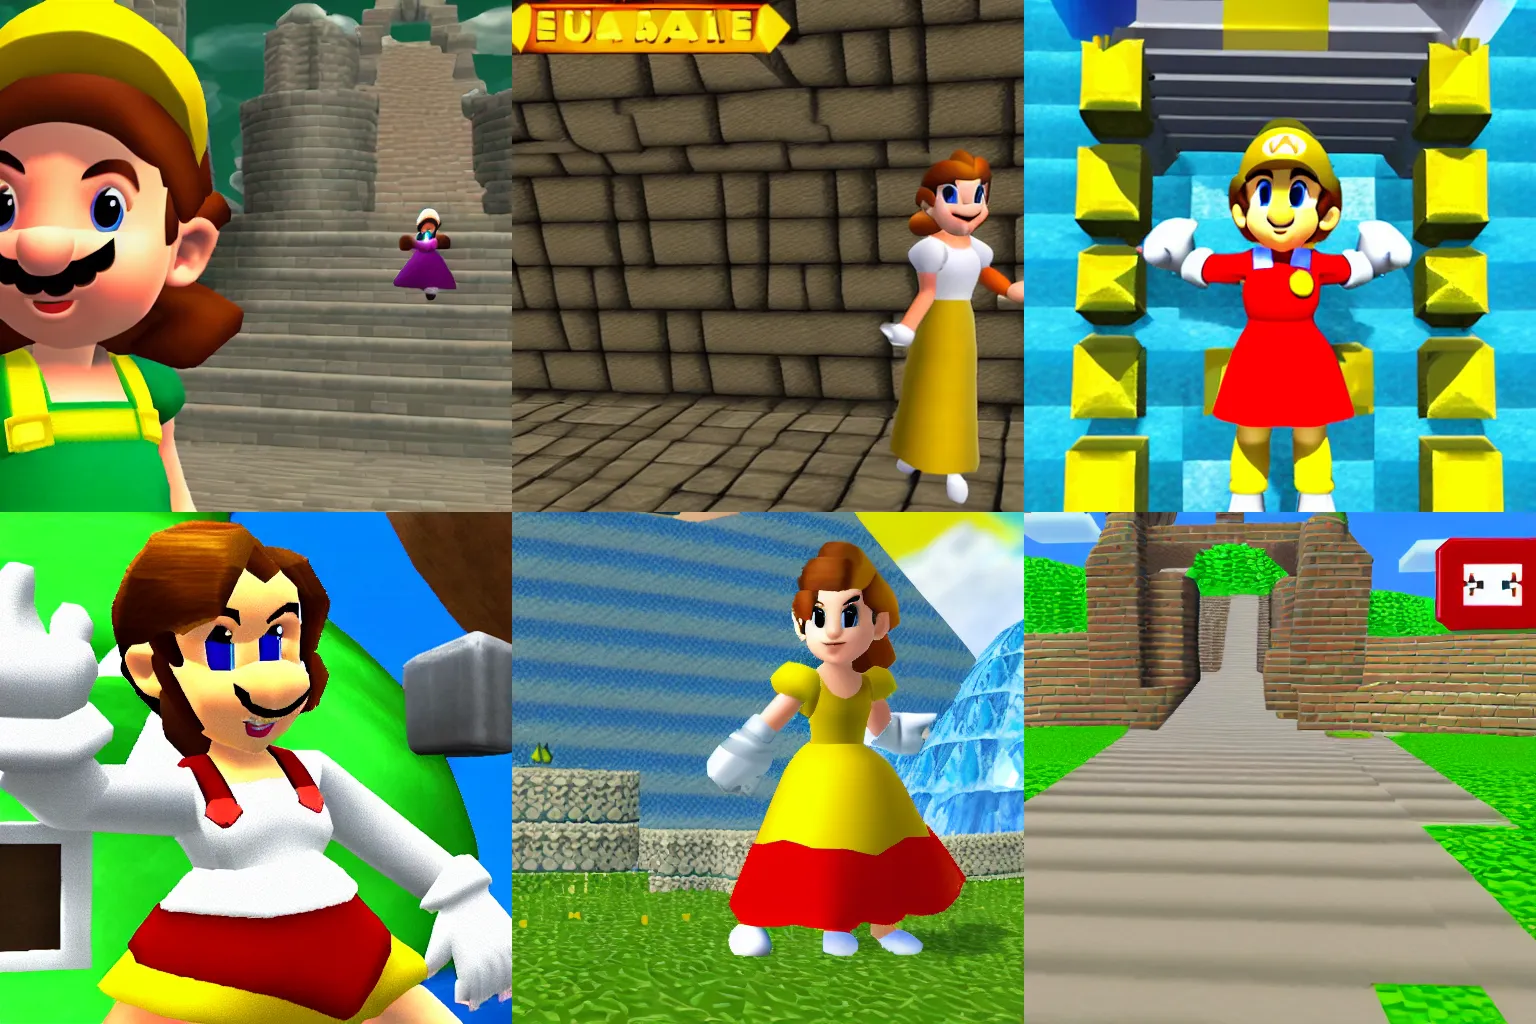 Prompt: Screenshot of Emma Watson in Super Mario 64